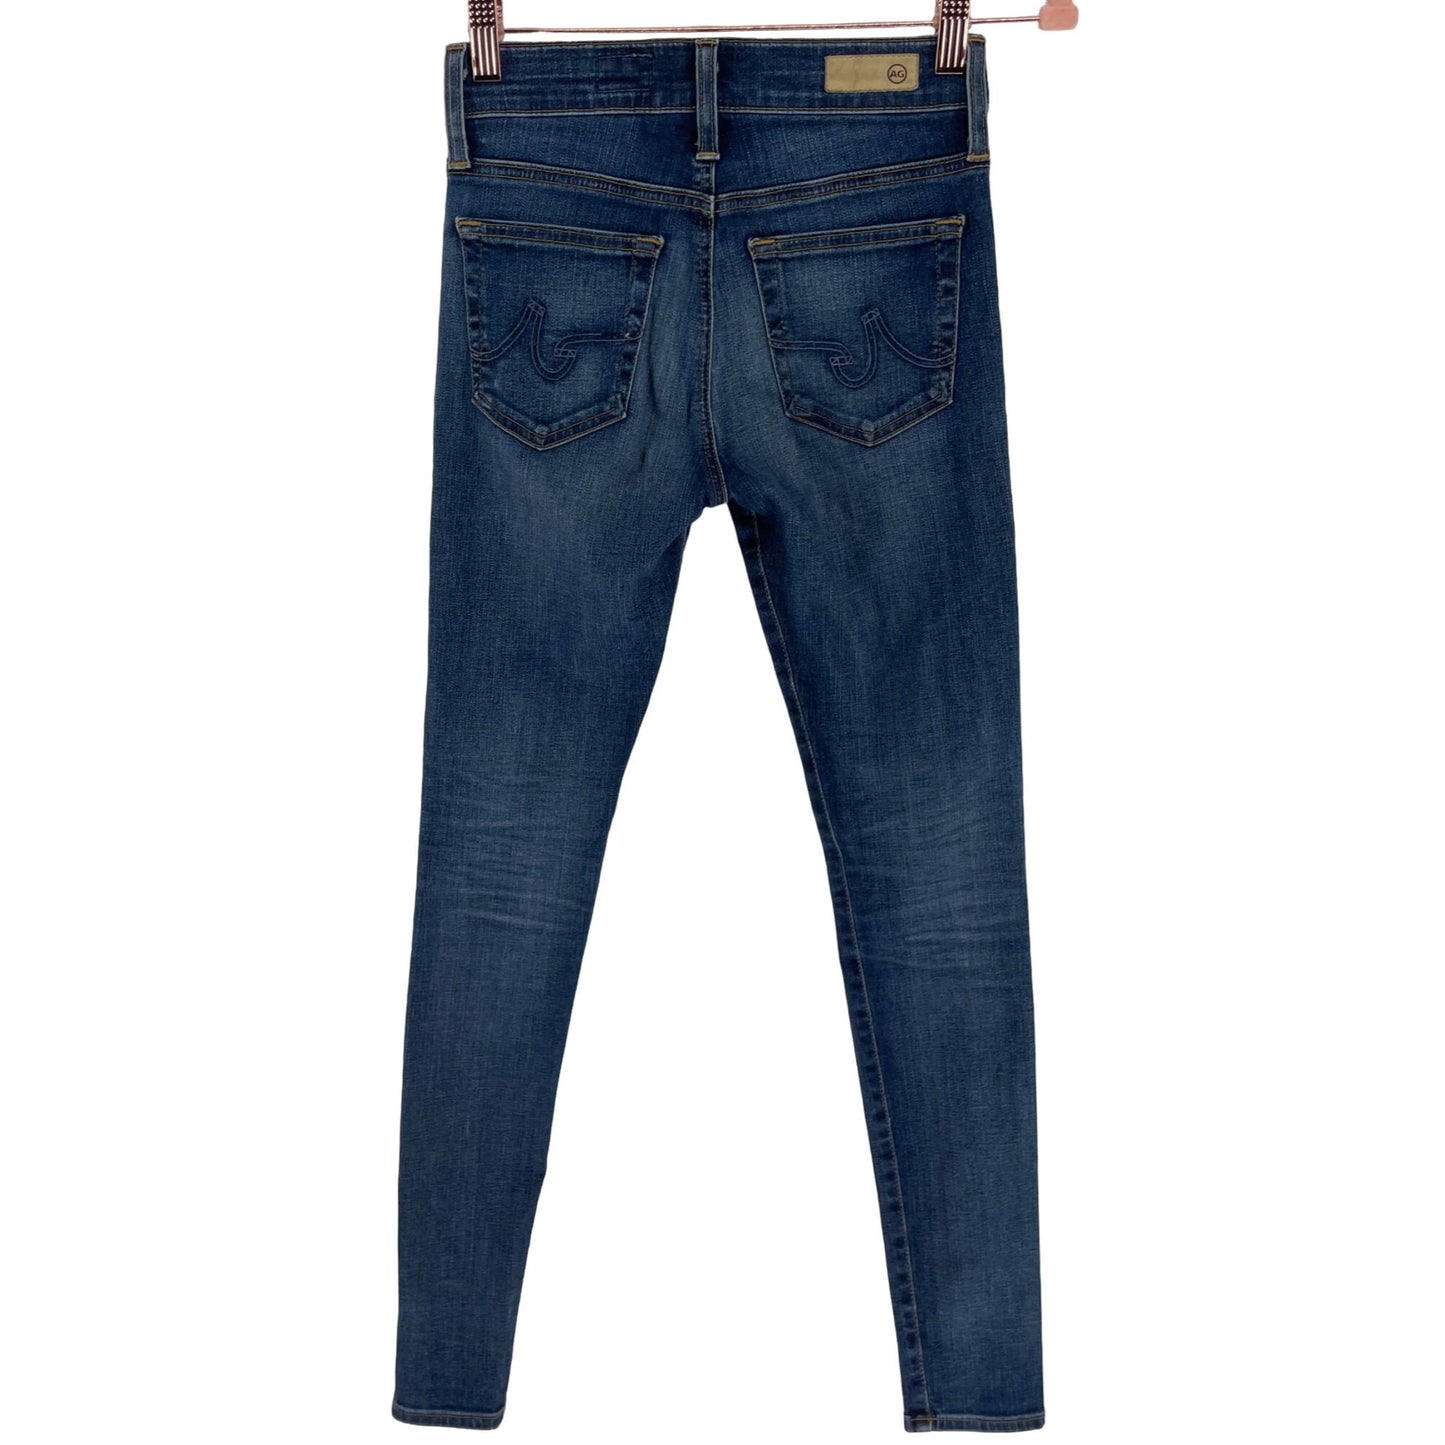 Adriano Goldschmied Women's Size 24R The Farrah High-Rise Skinny Denim Blue Jeans